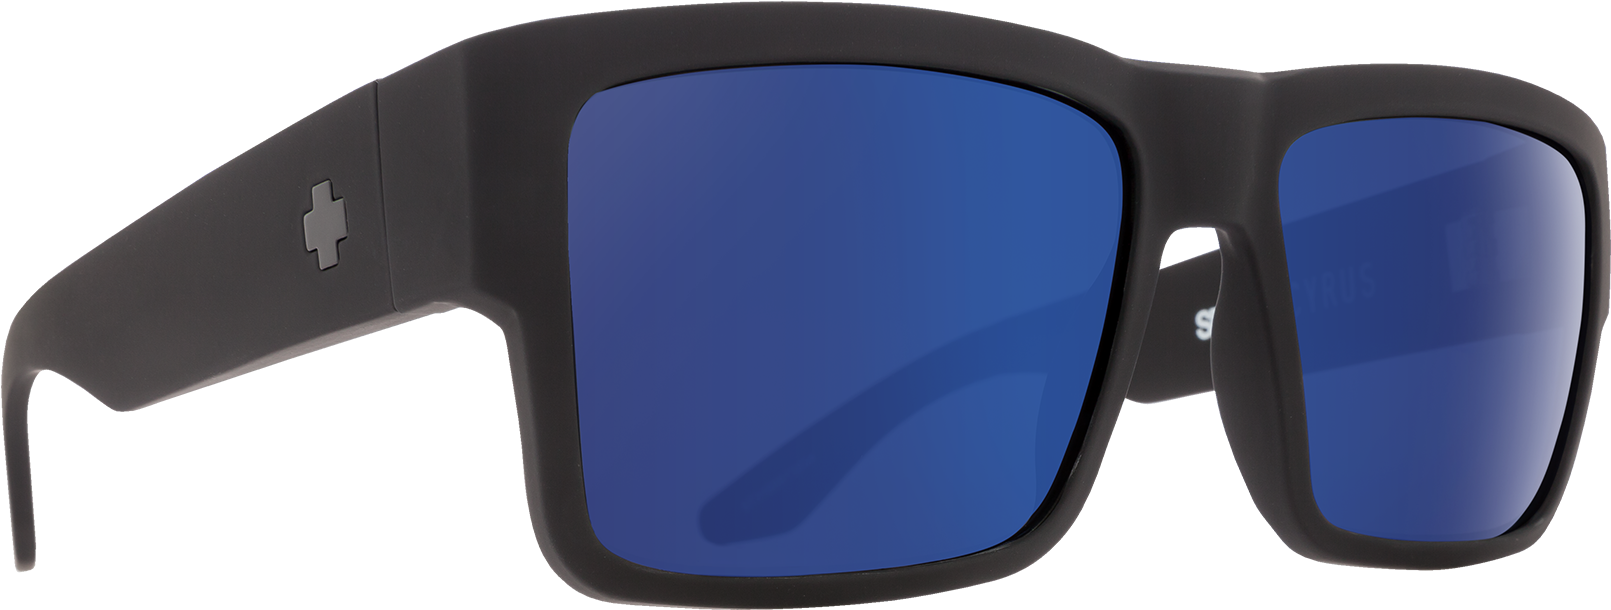 A Close Up Of A Blue Sunglasses